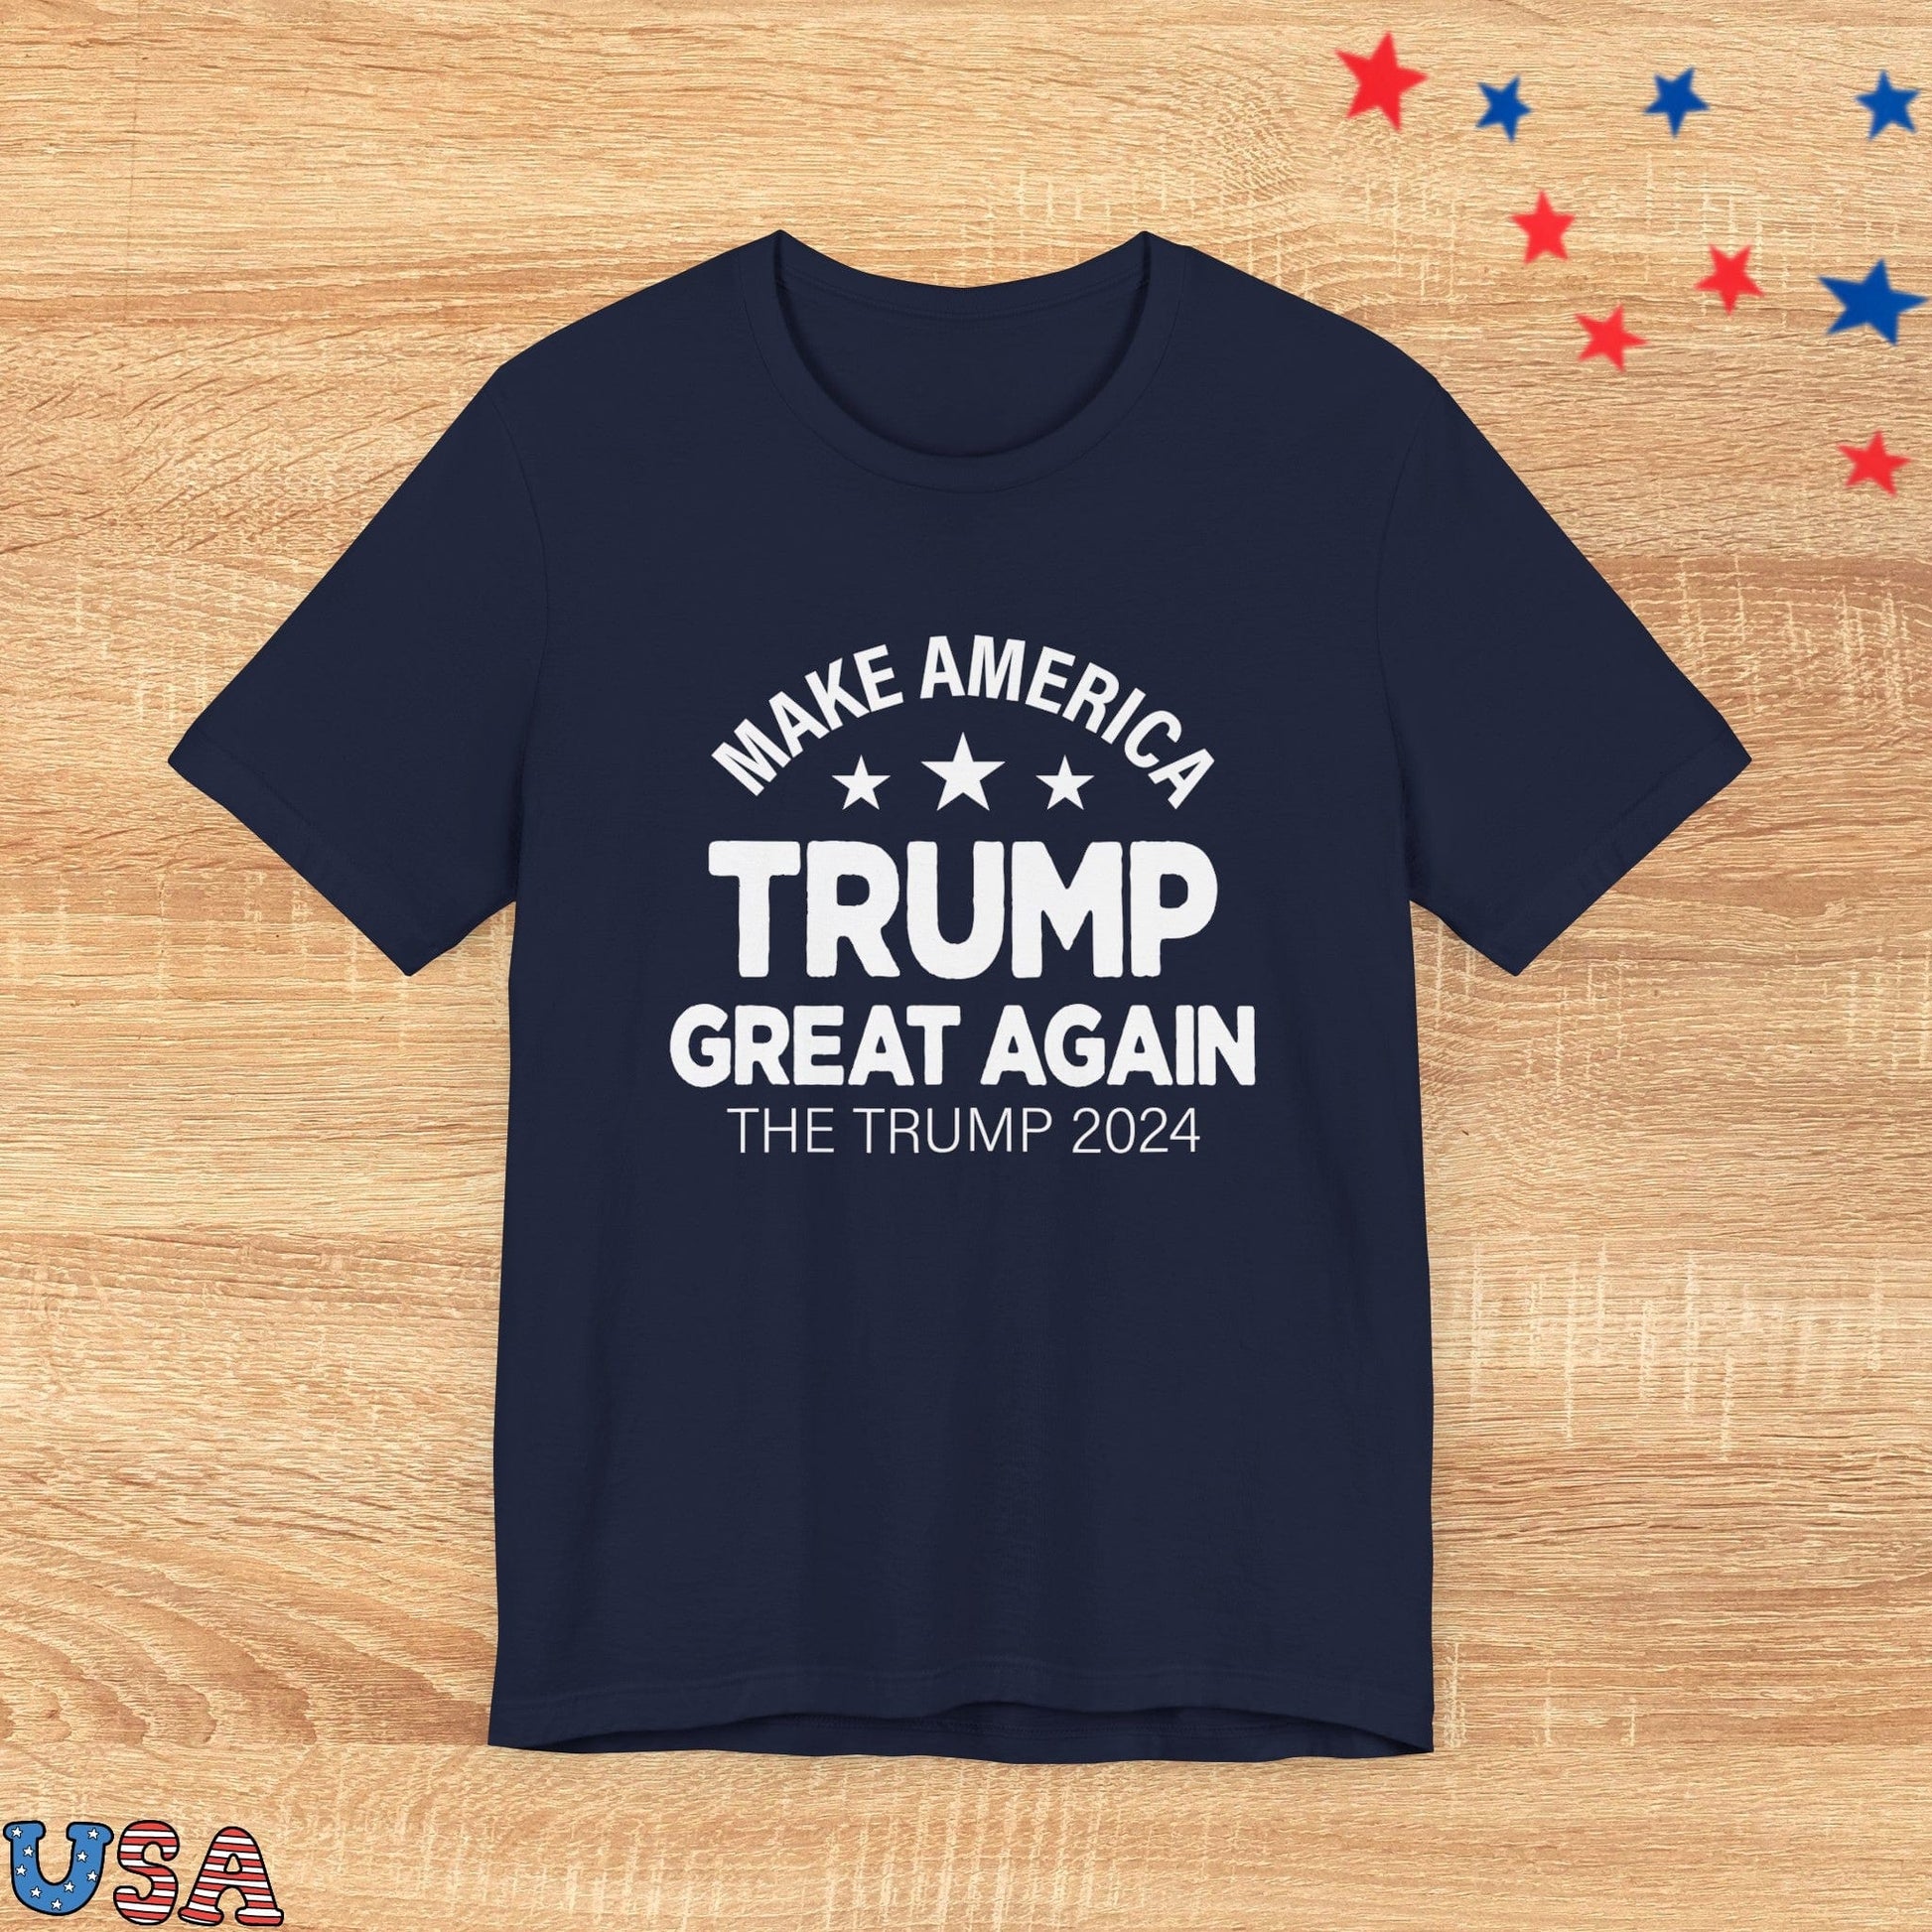 patriotic stars T-Shirt Navy / XS Make America Great Again! The Trump 2024